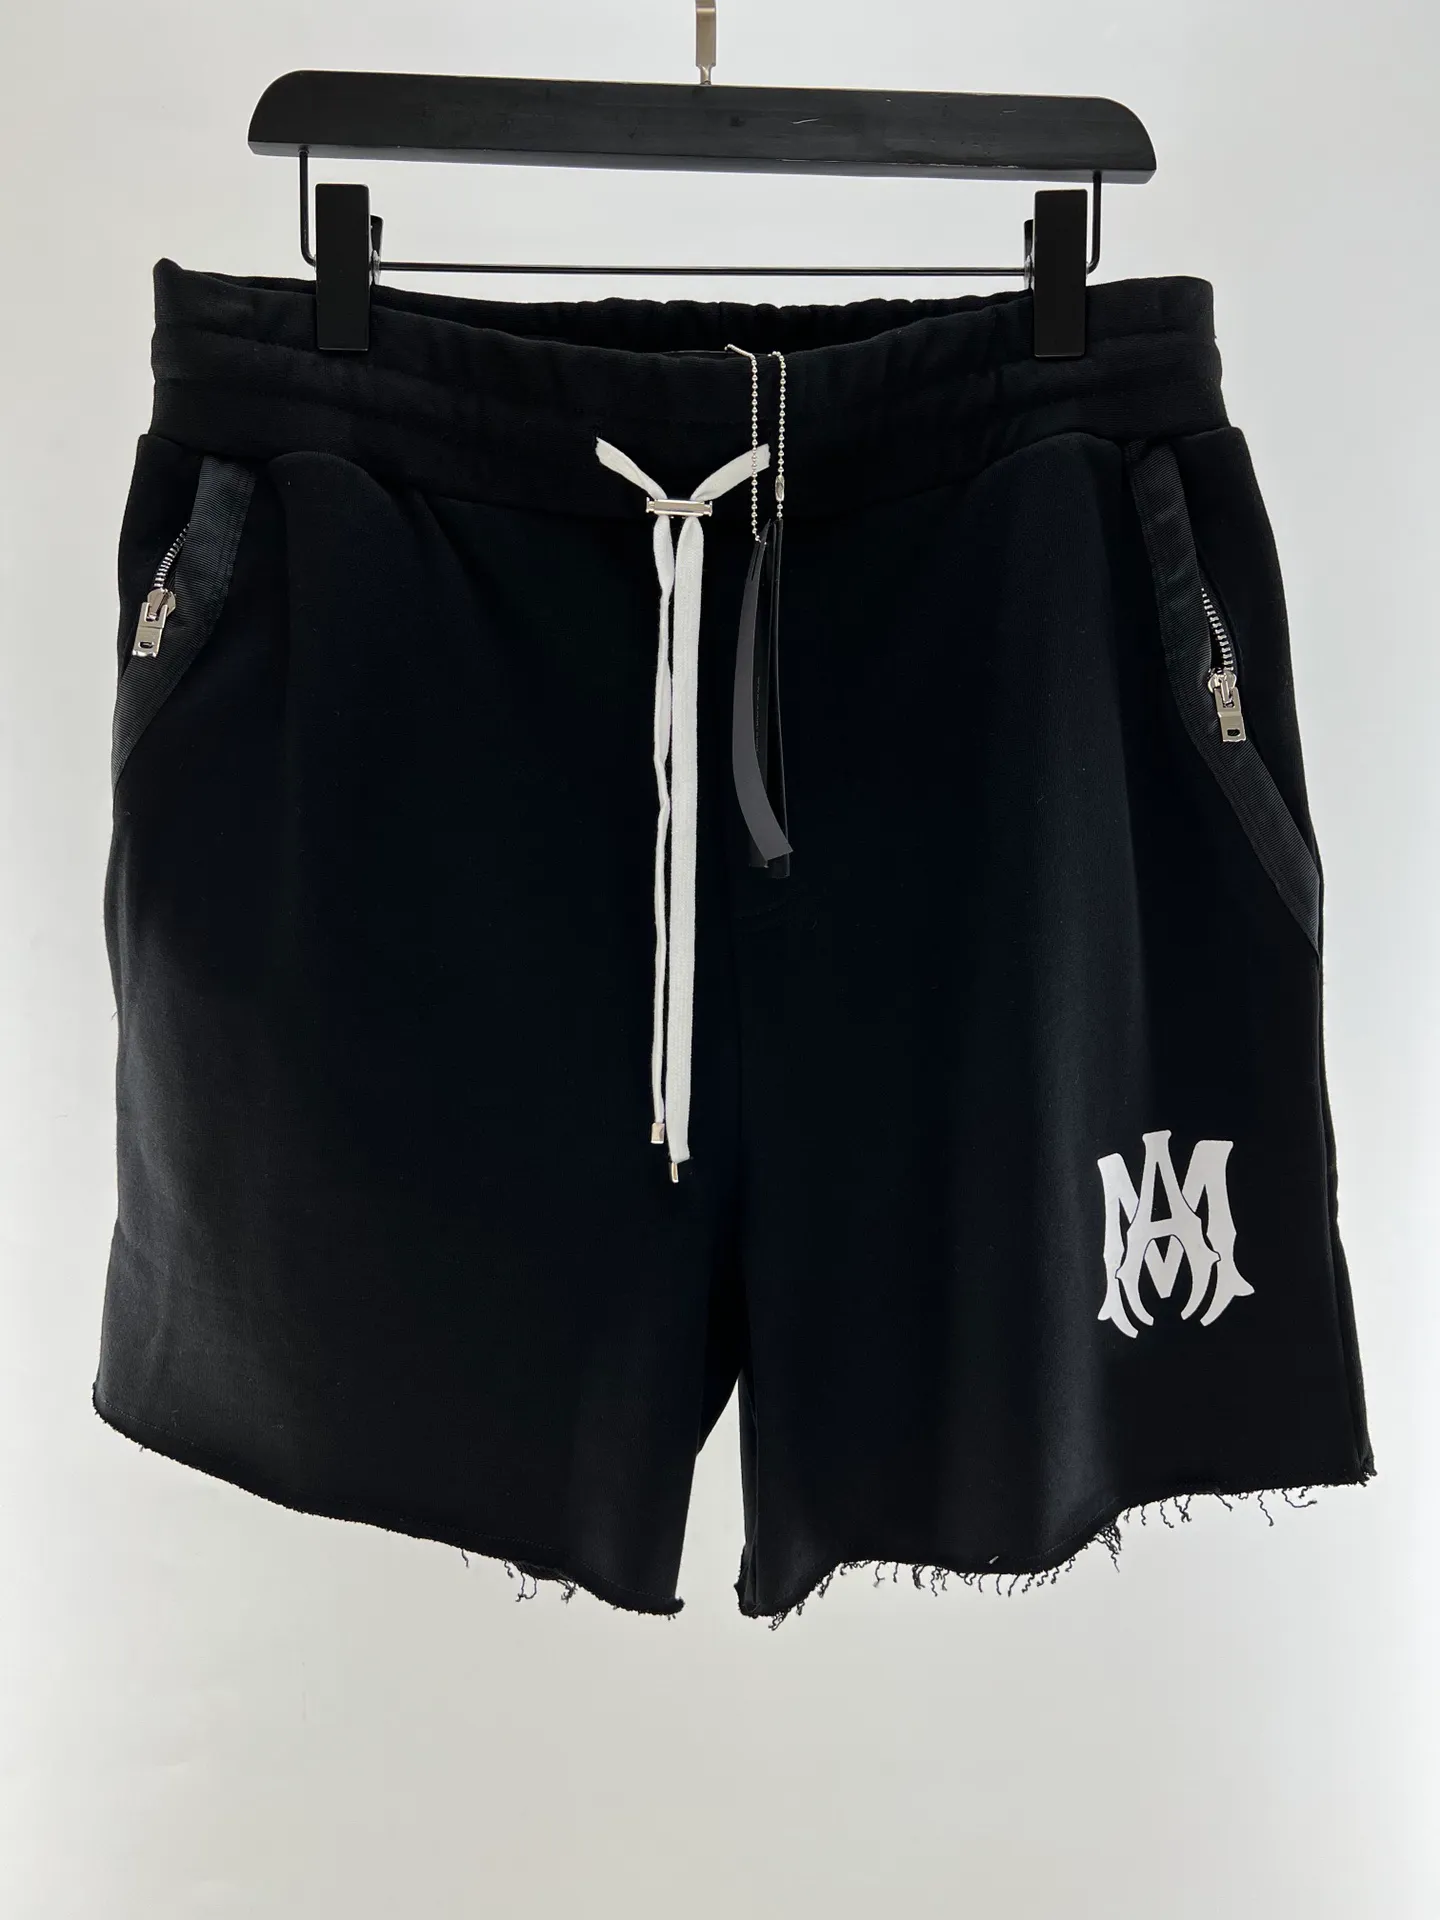 Summer 2022 new fashion brand casual shorts ~ US size designer shorts ~ high quality cotton blended print design mens luxury black shorts